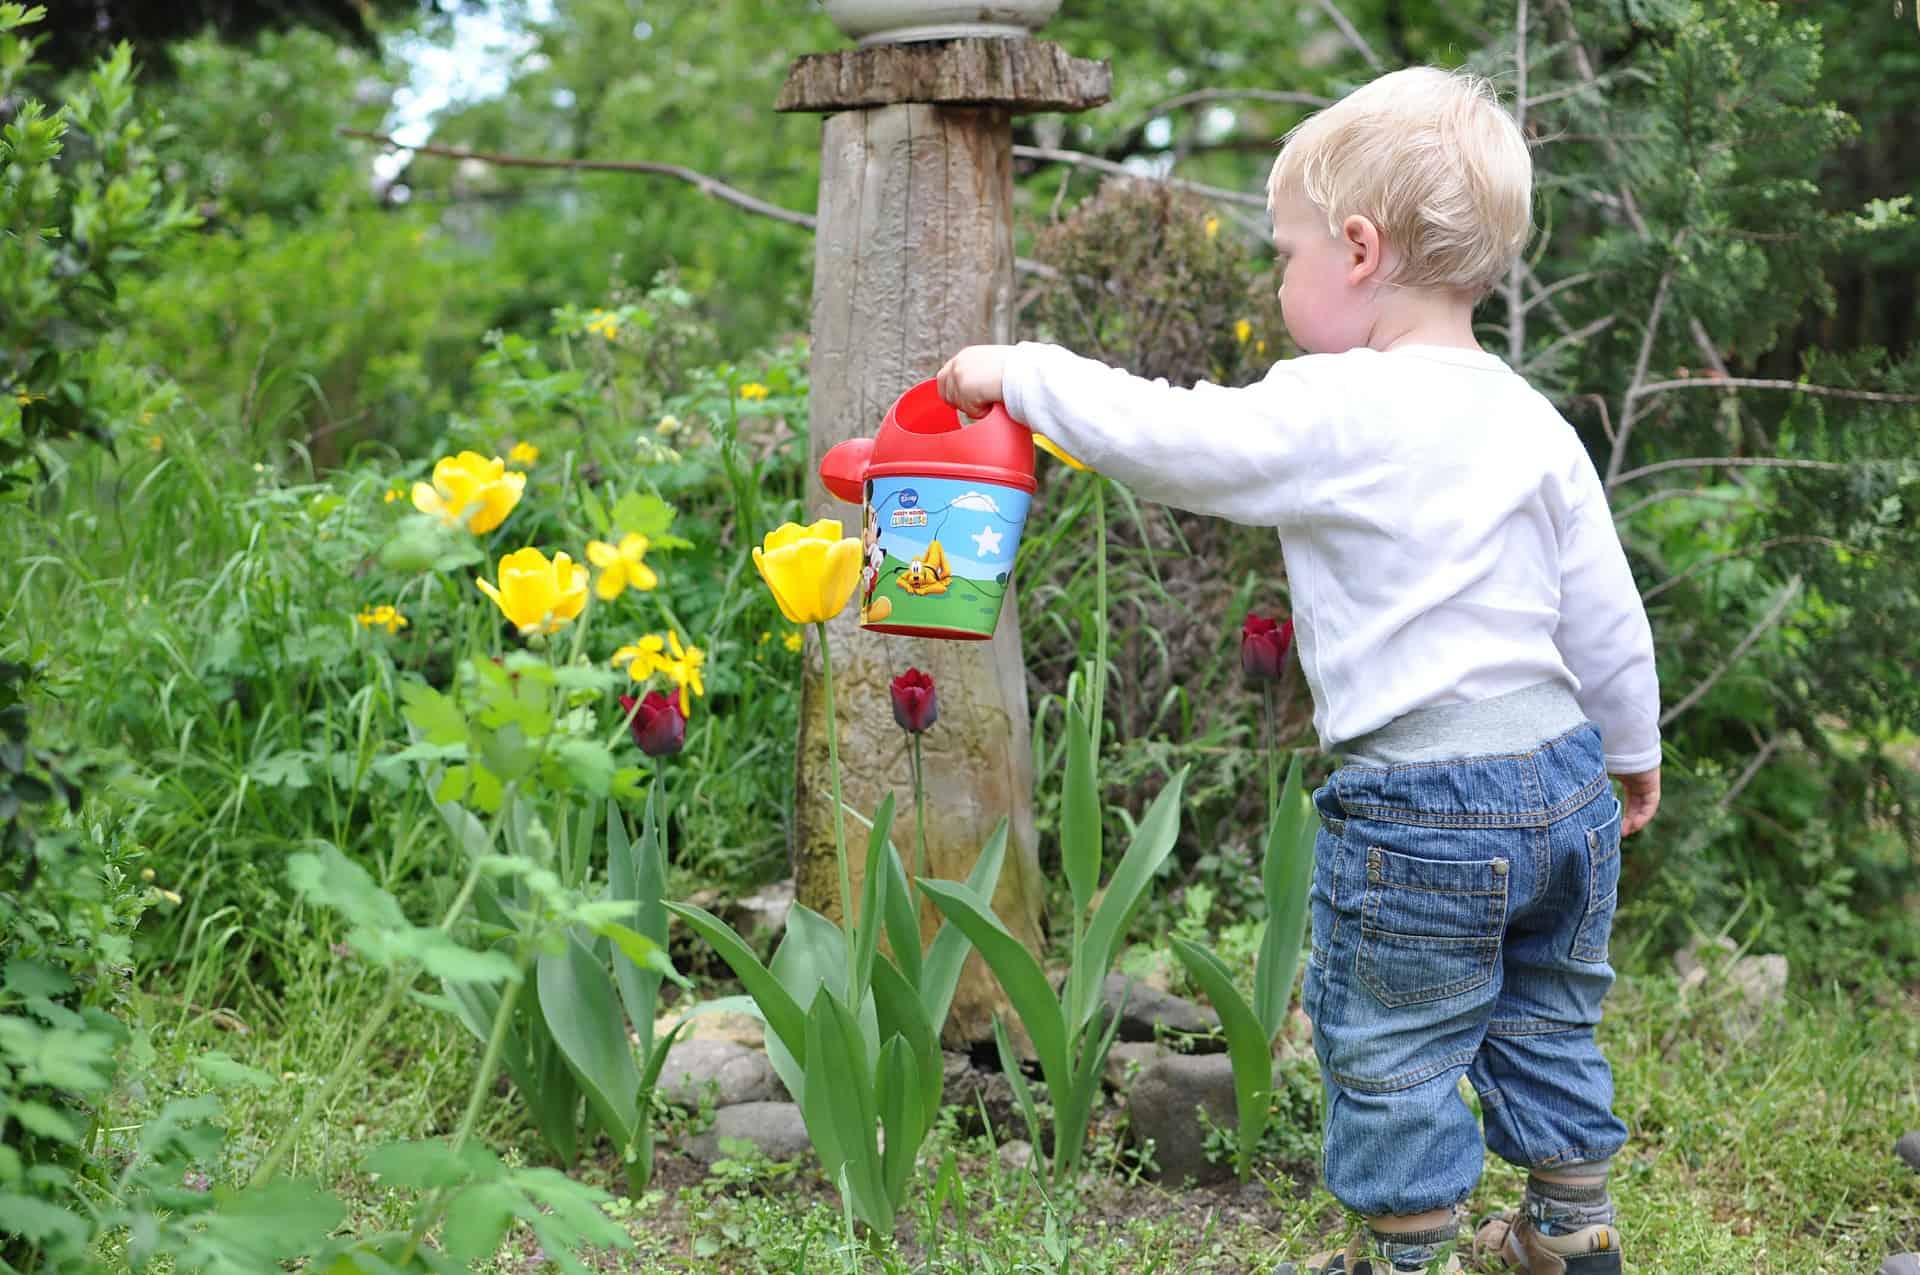 Child watering flowers in the garden